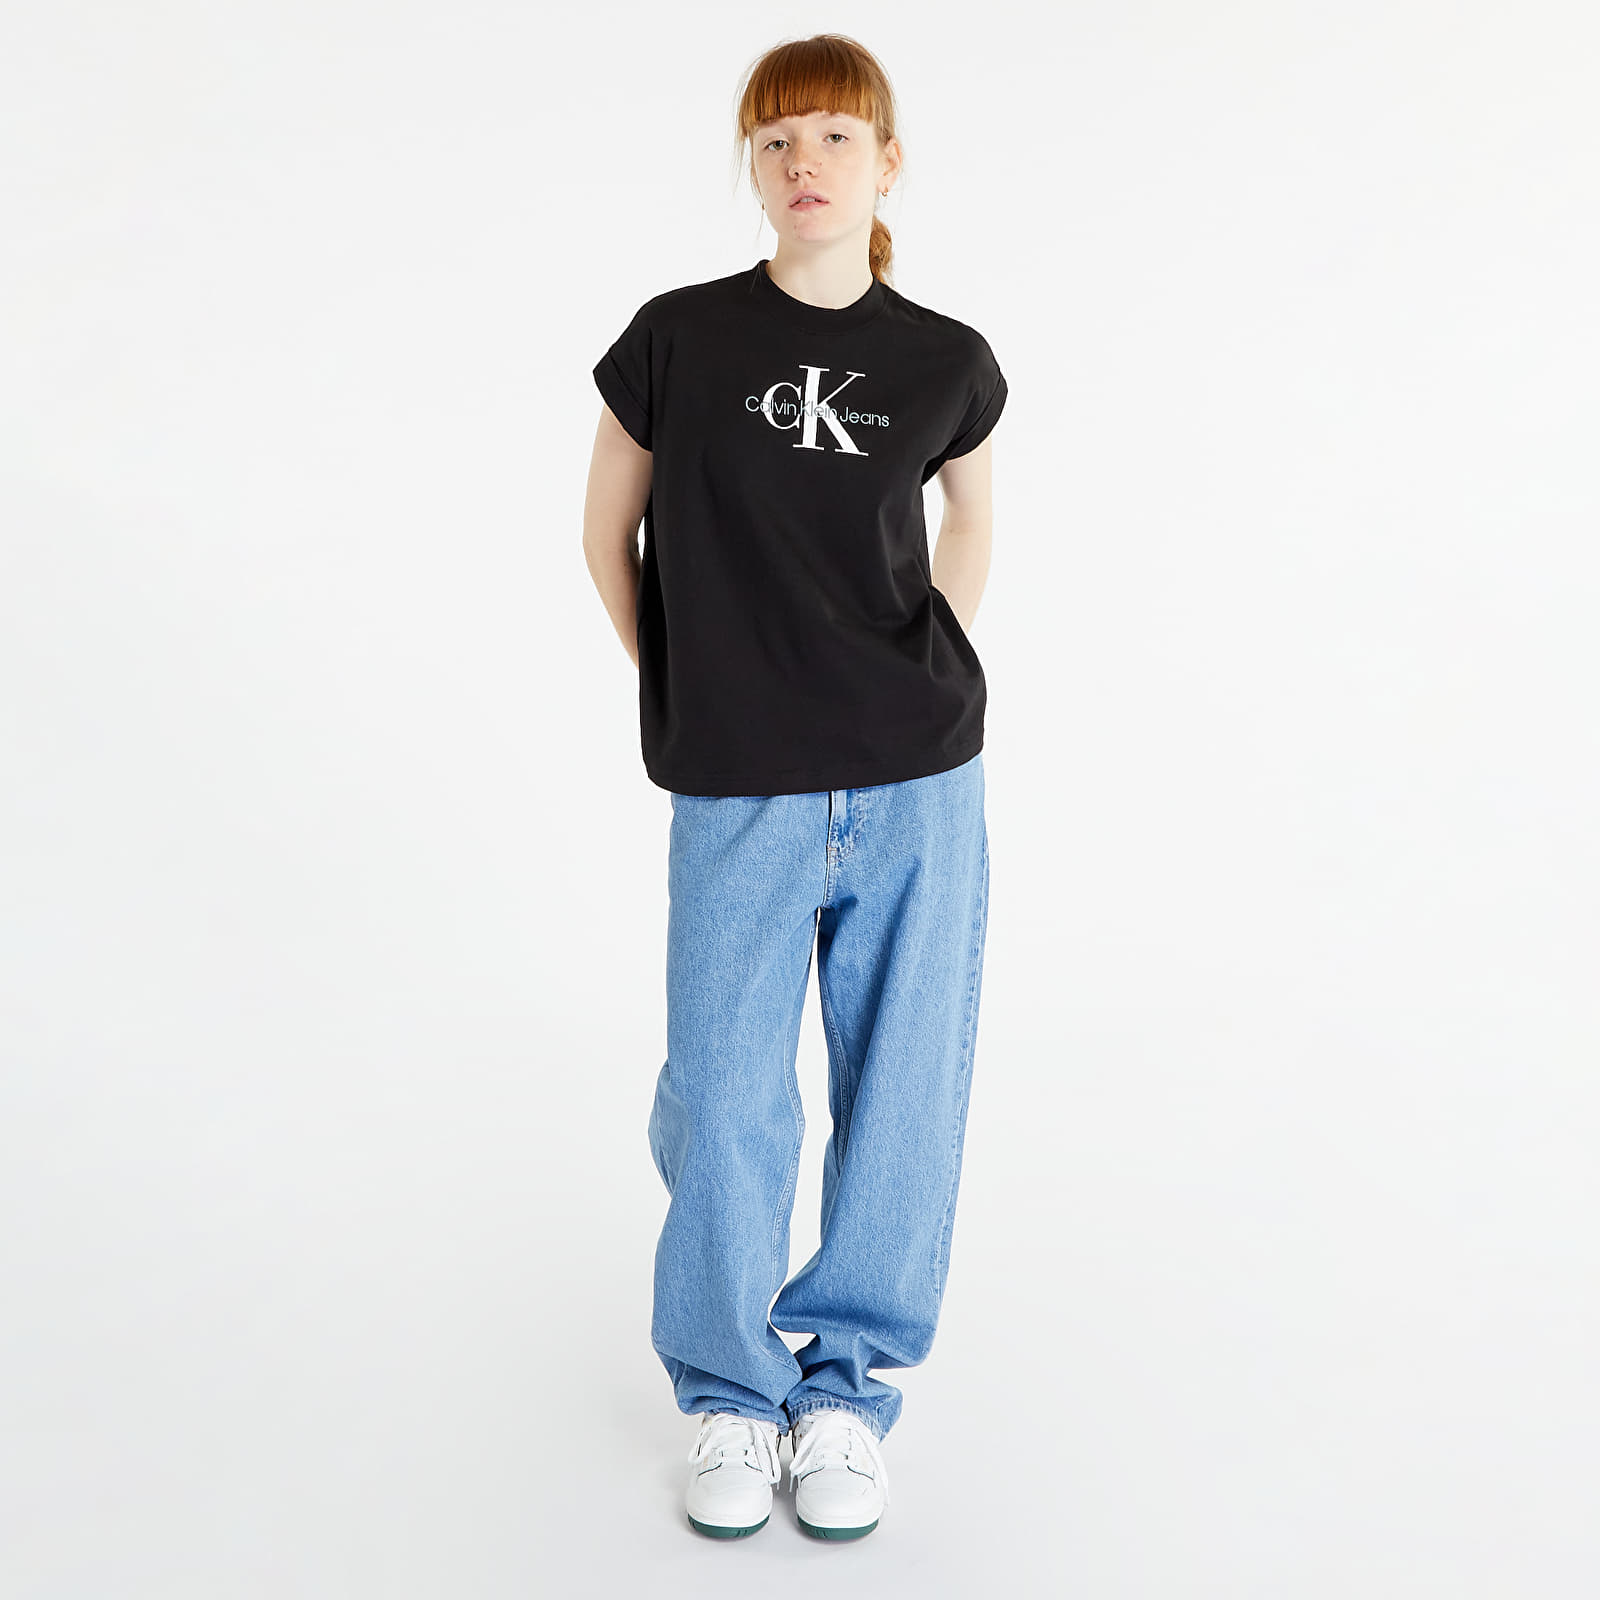 T-shirts Calvin Klein Jeans Relaxed Monogram T-Shirt Black